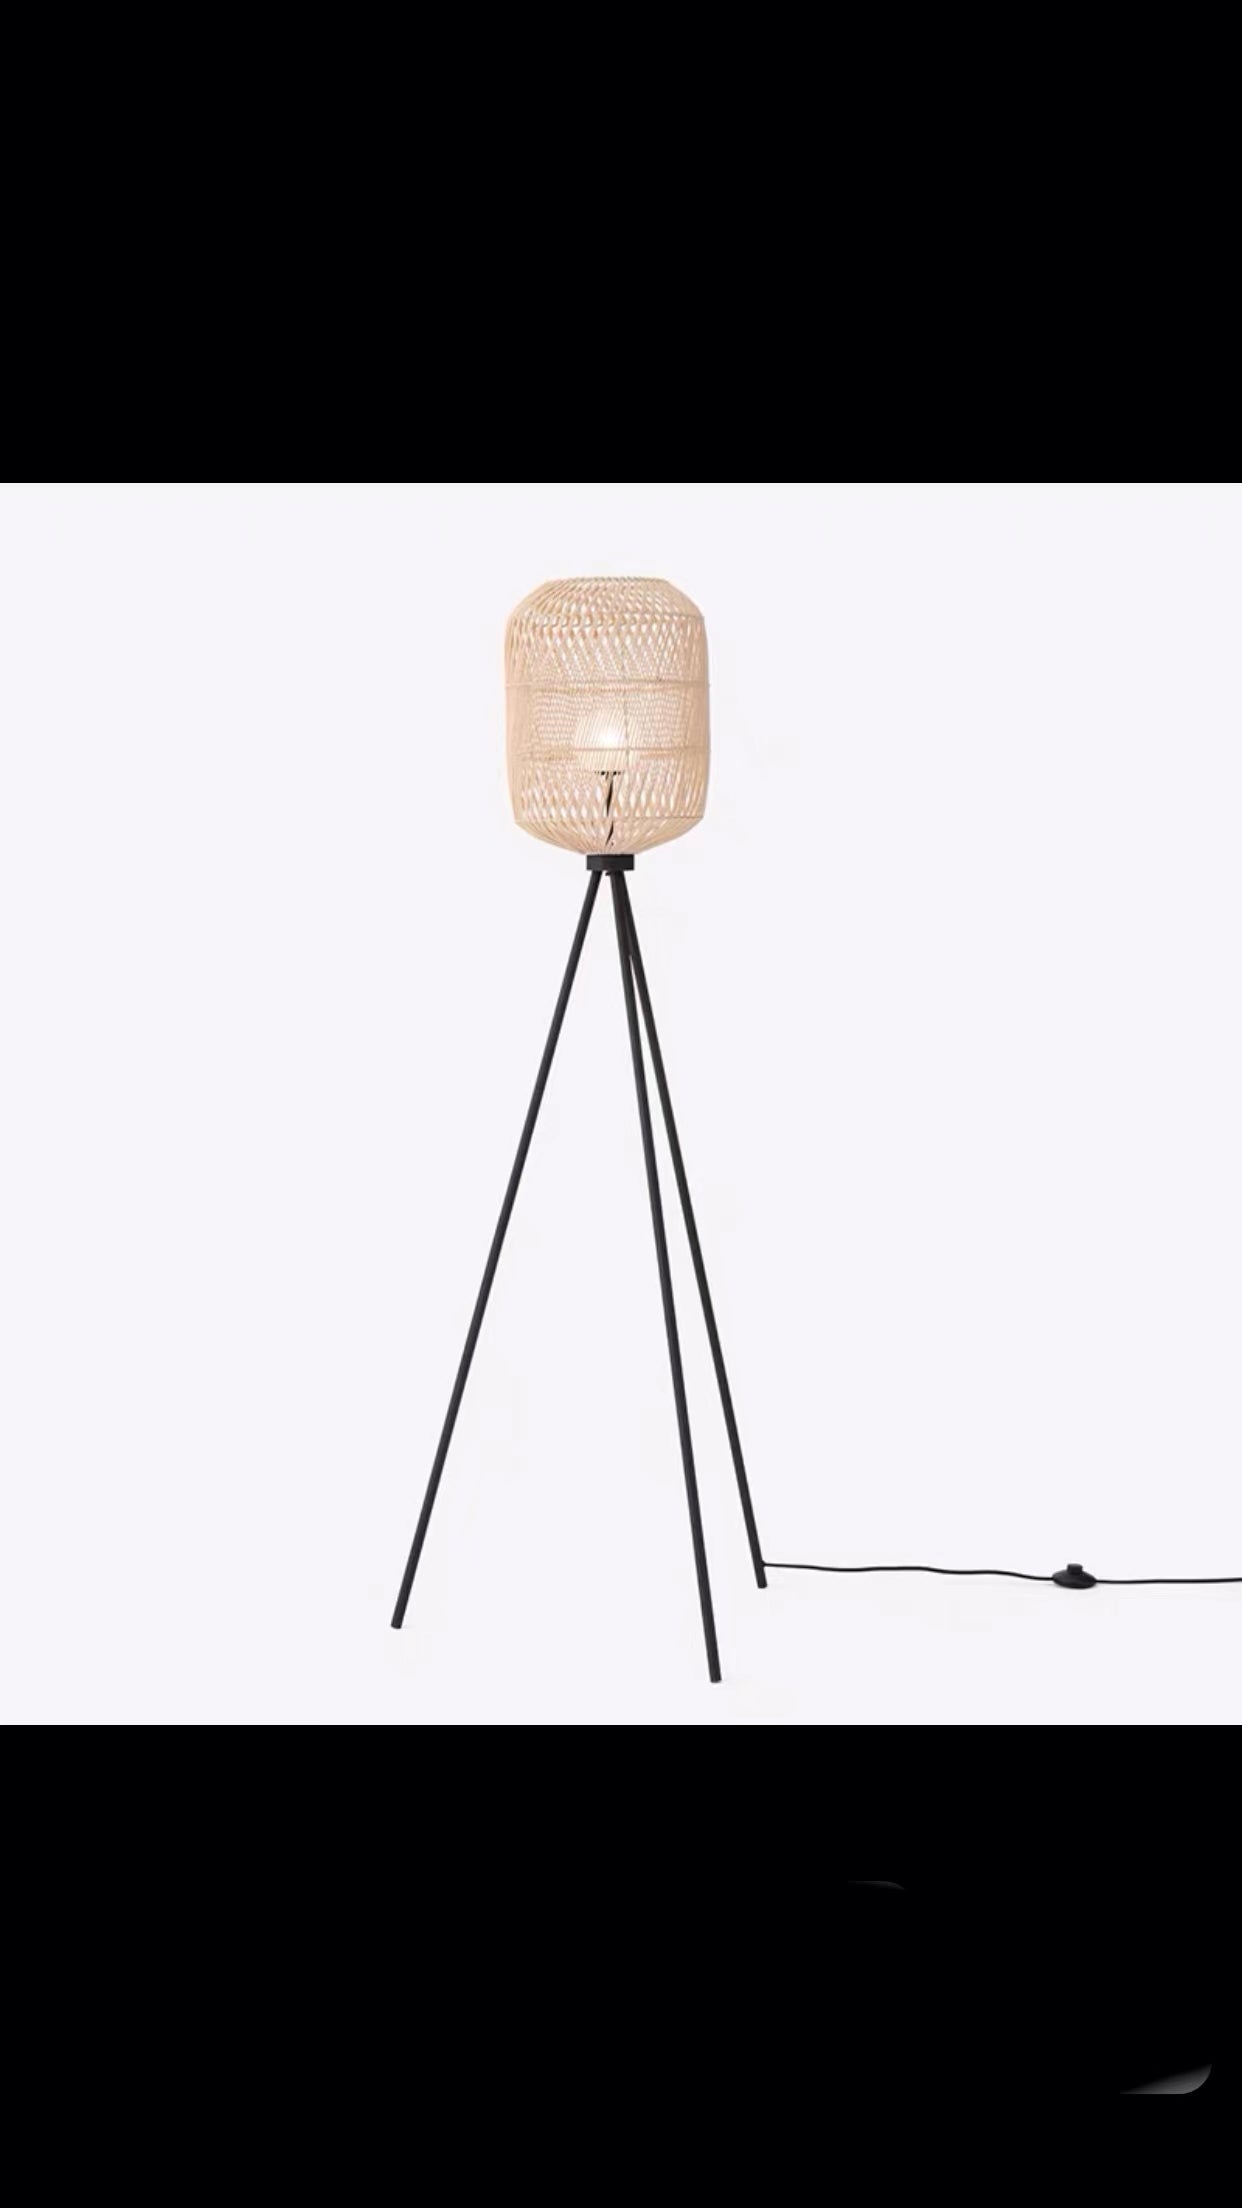 Antone Lantern Tripod Floor Lamp - 4 Seasons Home Gadgets